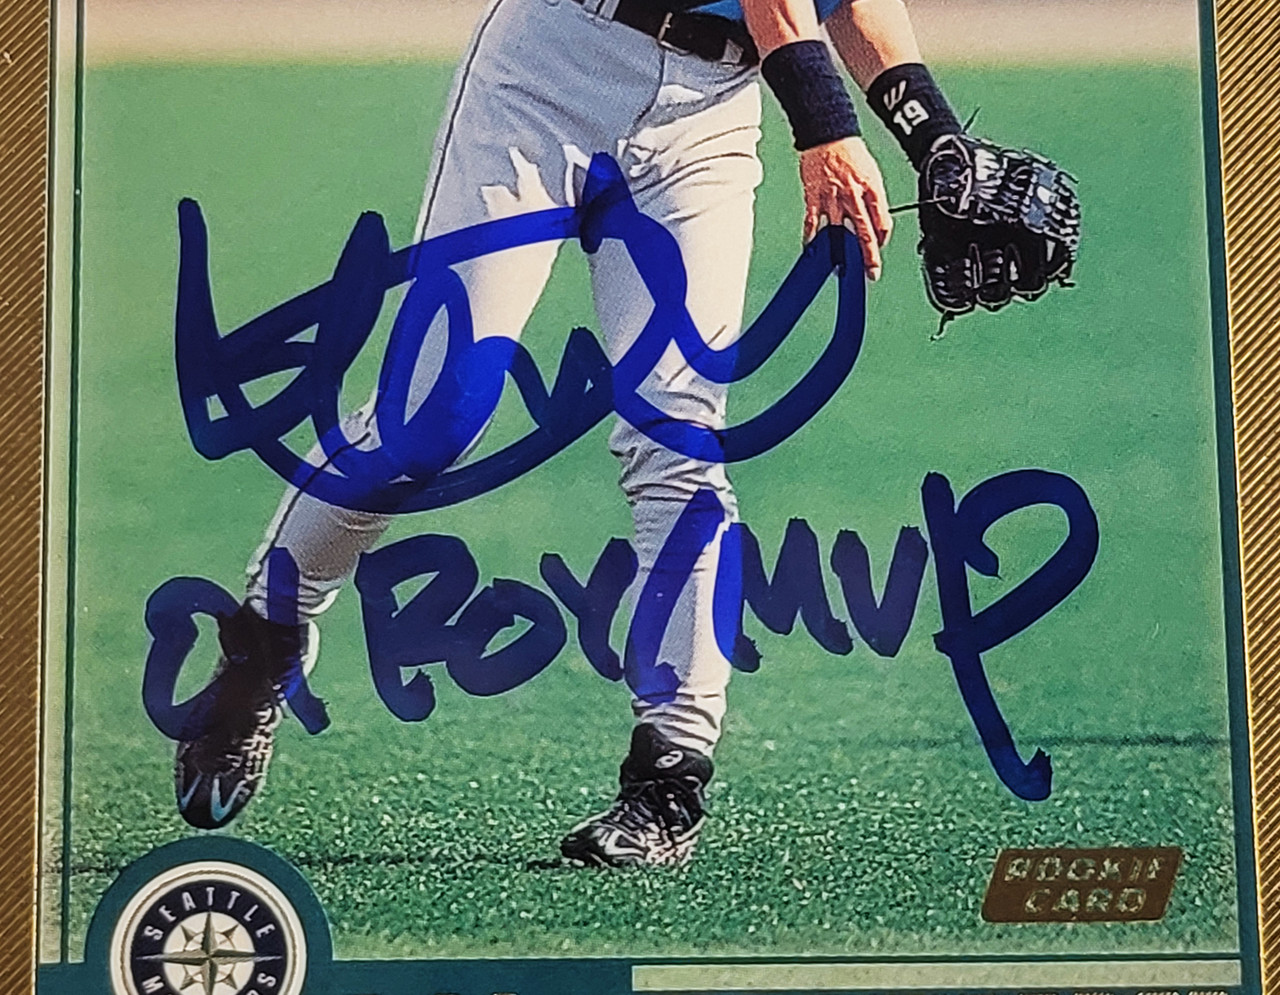 2010 Topps Ichiro 2001 MLB All Star Game Commemorative Patch Card MCP-35